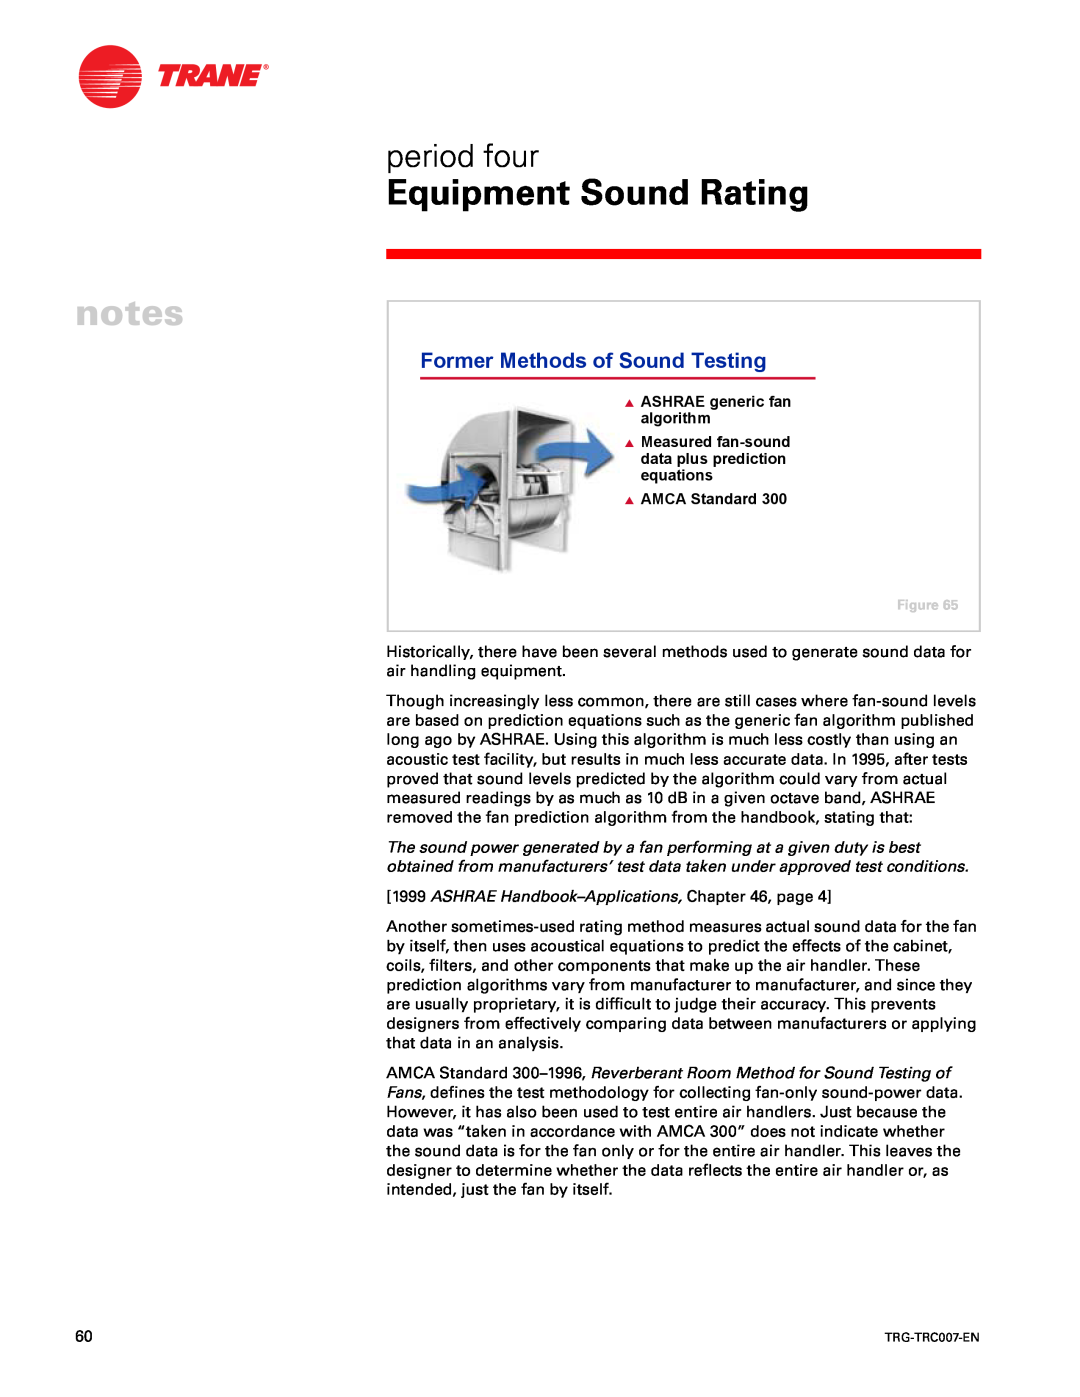 Trane TRG-TRC007-EN Former Methods of Sound Testing, Equipment Sound Rating, period four, I ASHRAE generic fan algorithm 